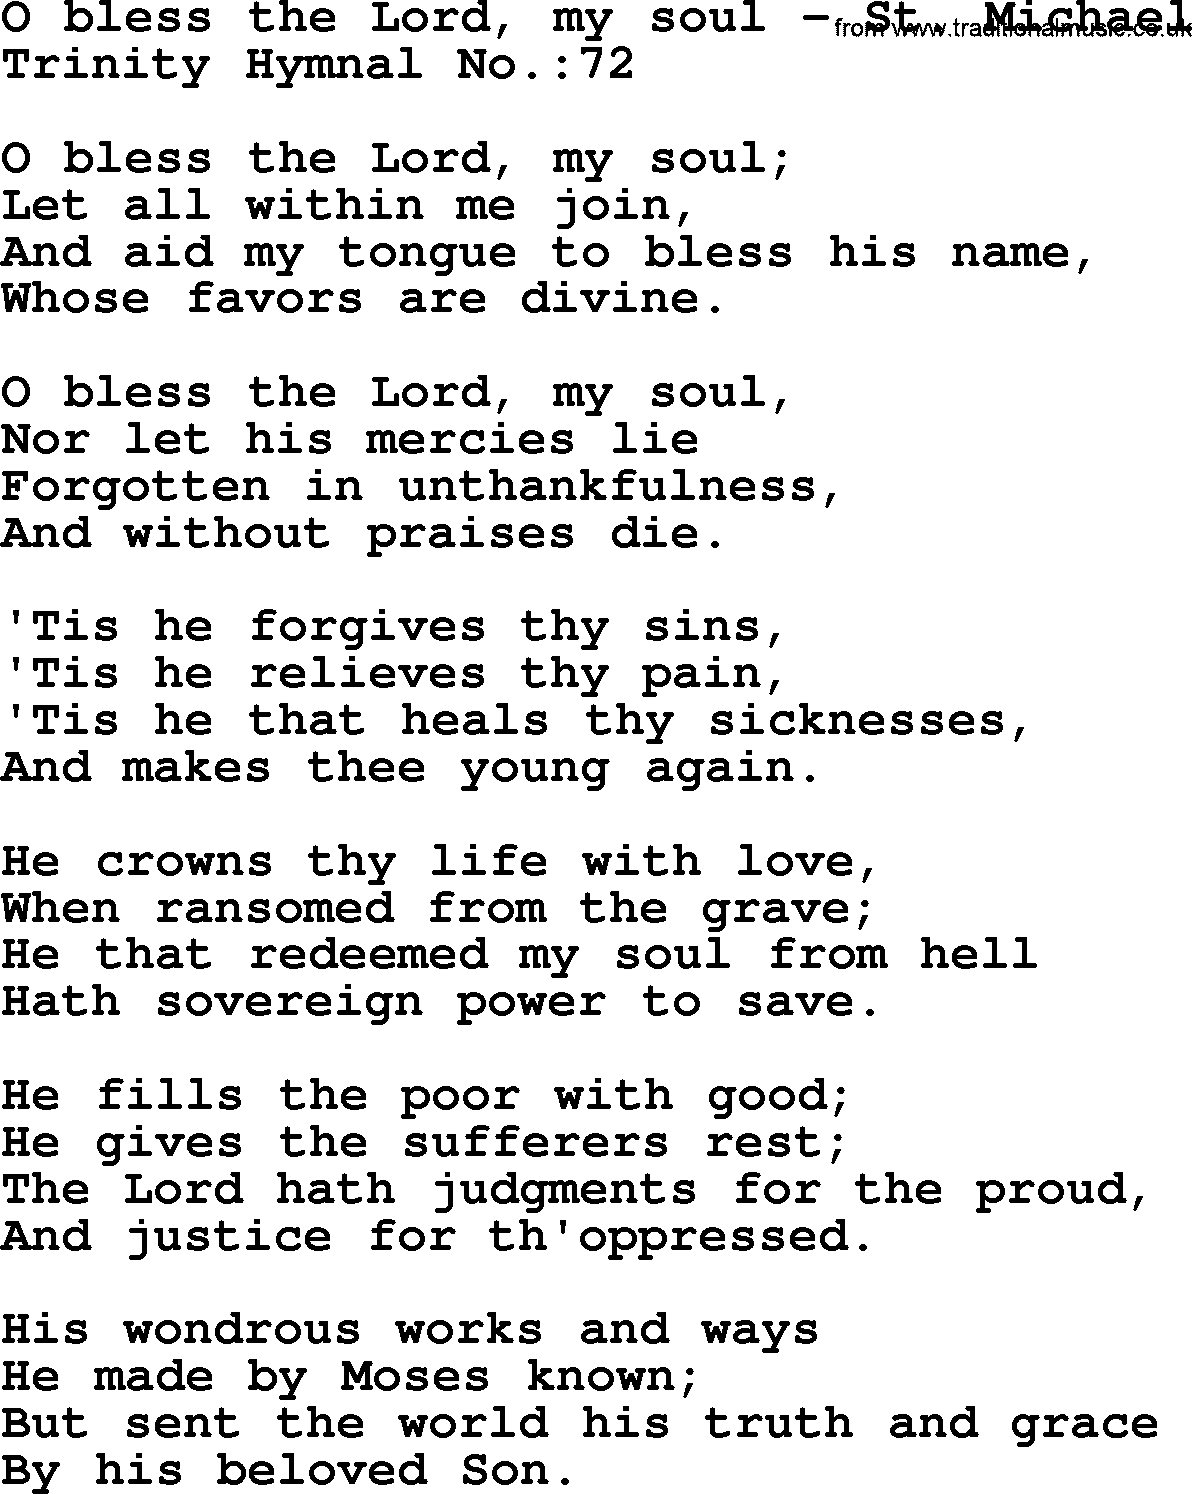 Trinity Hymnal Hymn: O Bless The Lord, My Soul--St. Michael, lyrics with midi music